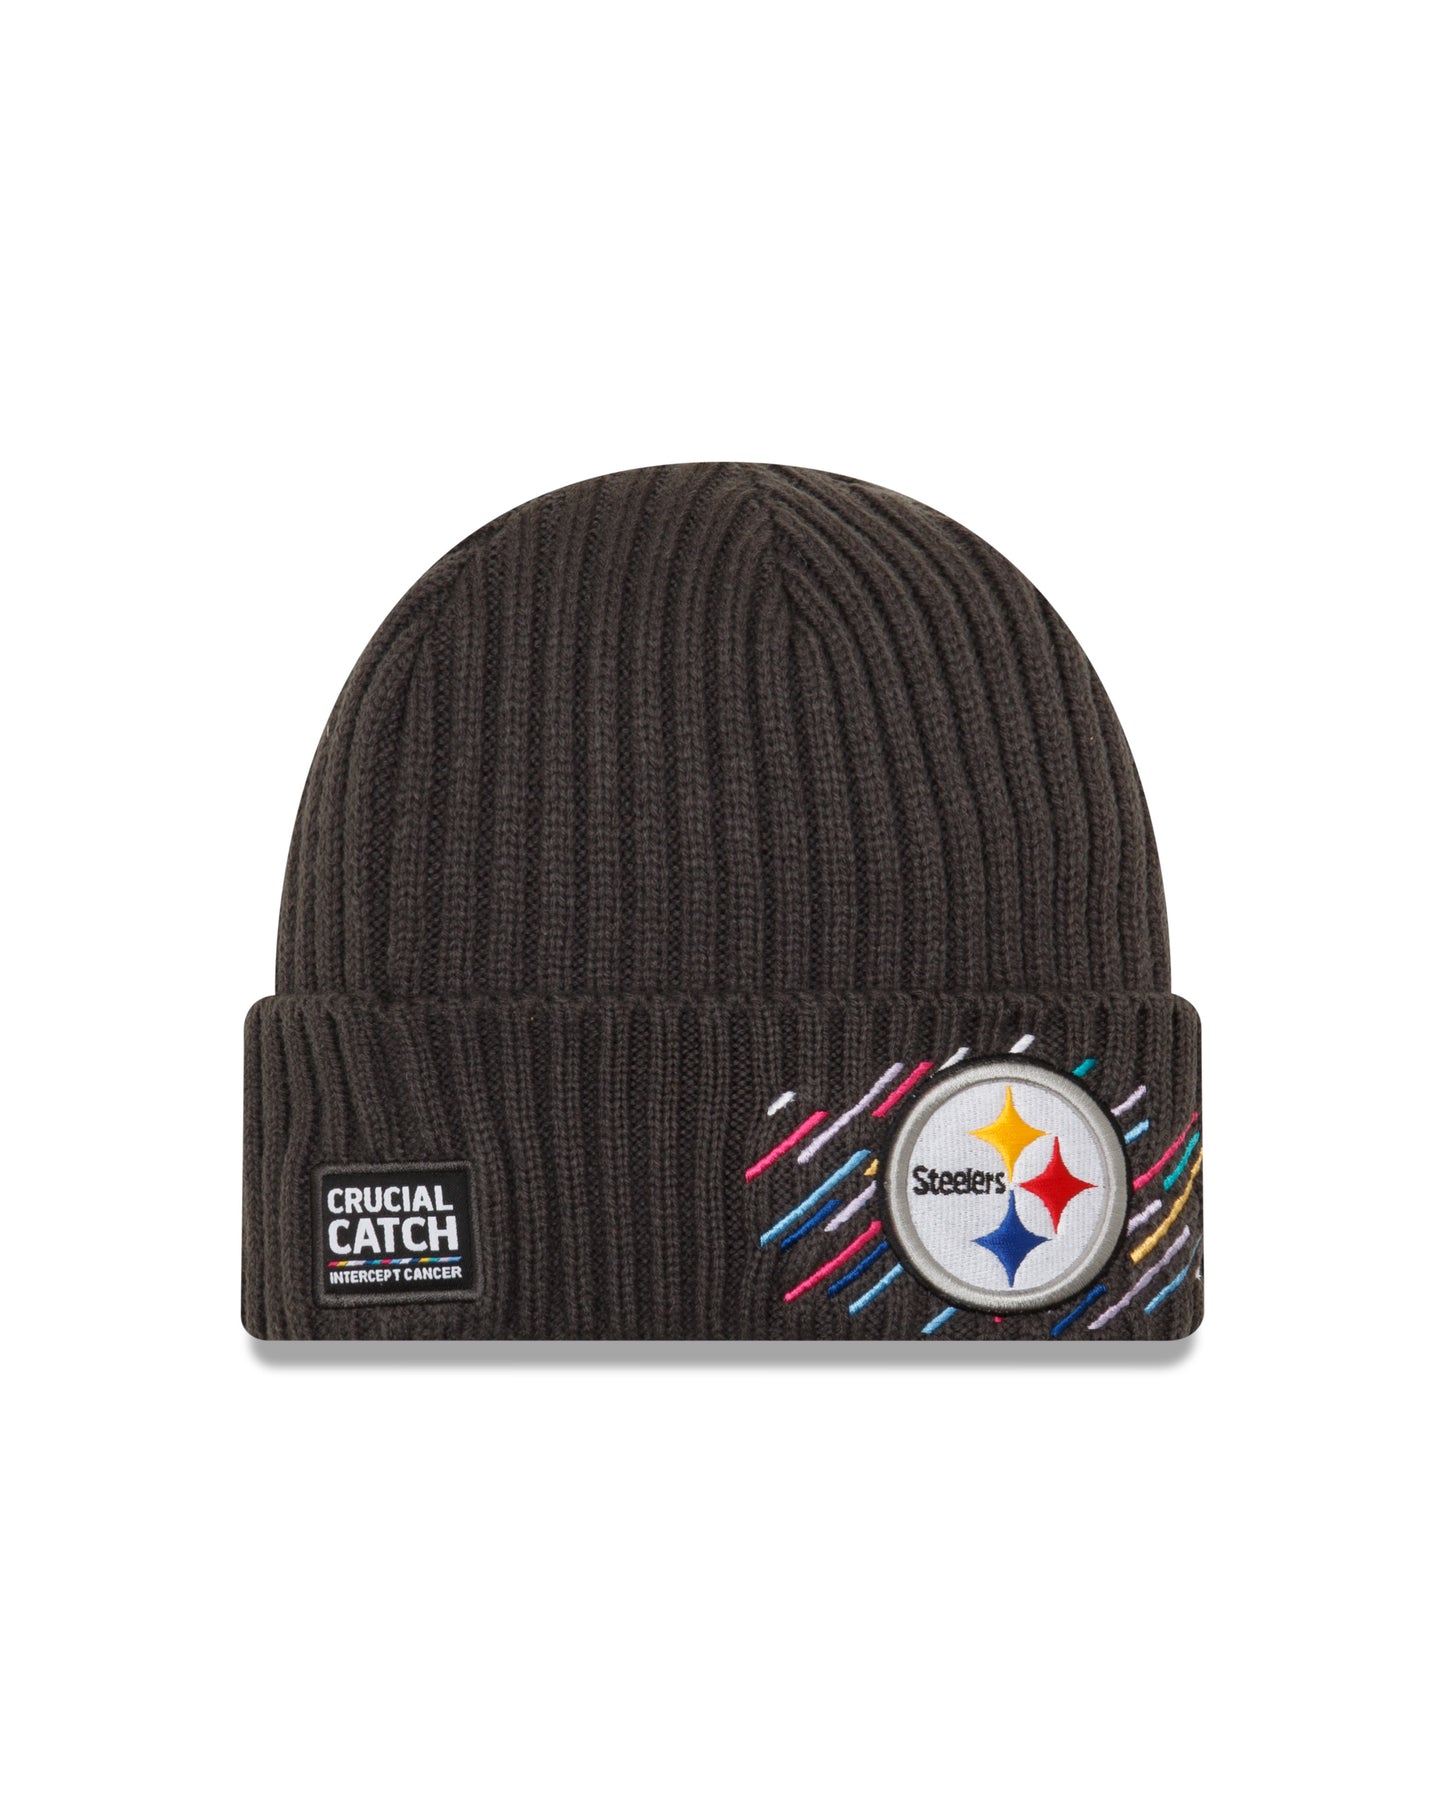 Pittsburgh Steelers New Era Crucial Catch Cuffed Knit Hat - Gray